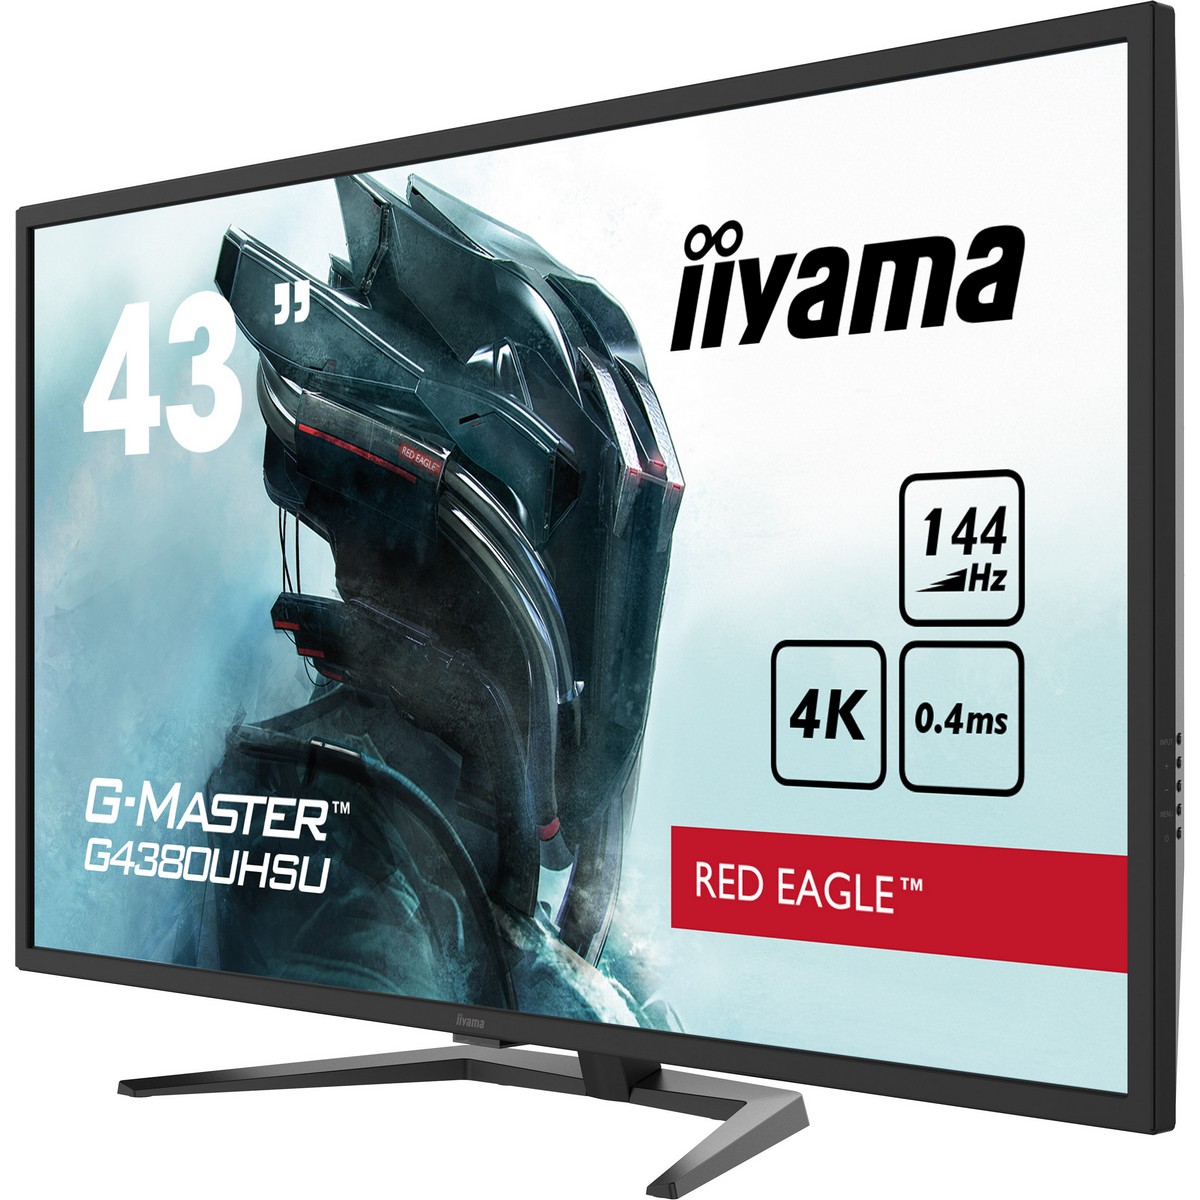 Iiyama - iiyama 43" G-Master G4380UHSU-B1 3840x2160 VA 144Hz 0.4ms FreeSync Widescreen Gaming Monitor